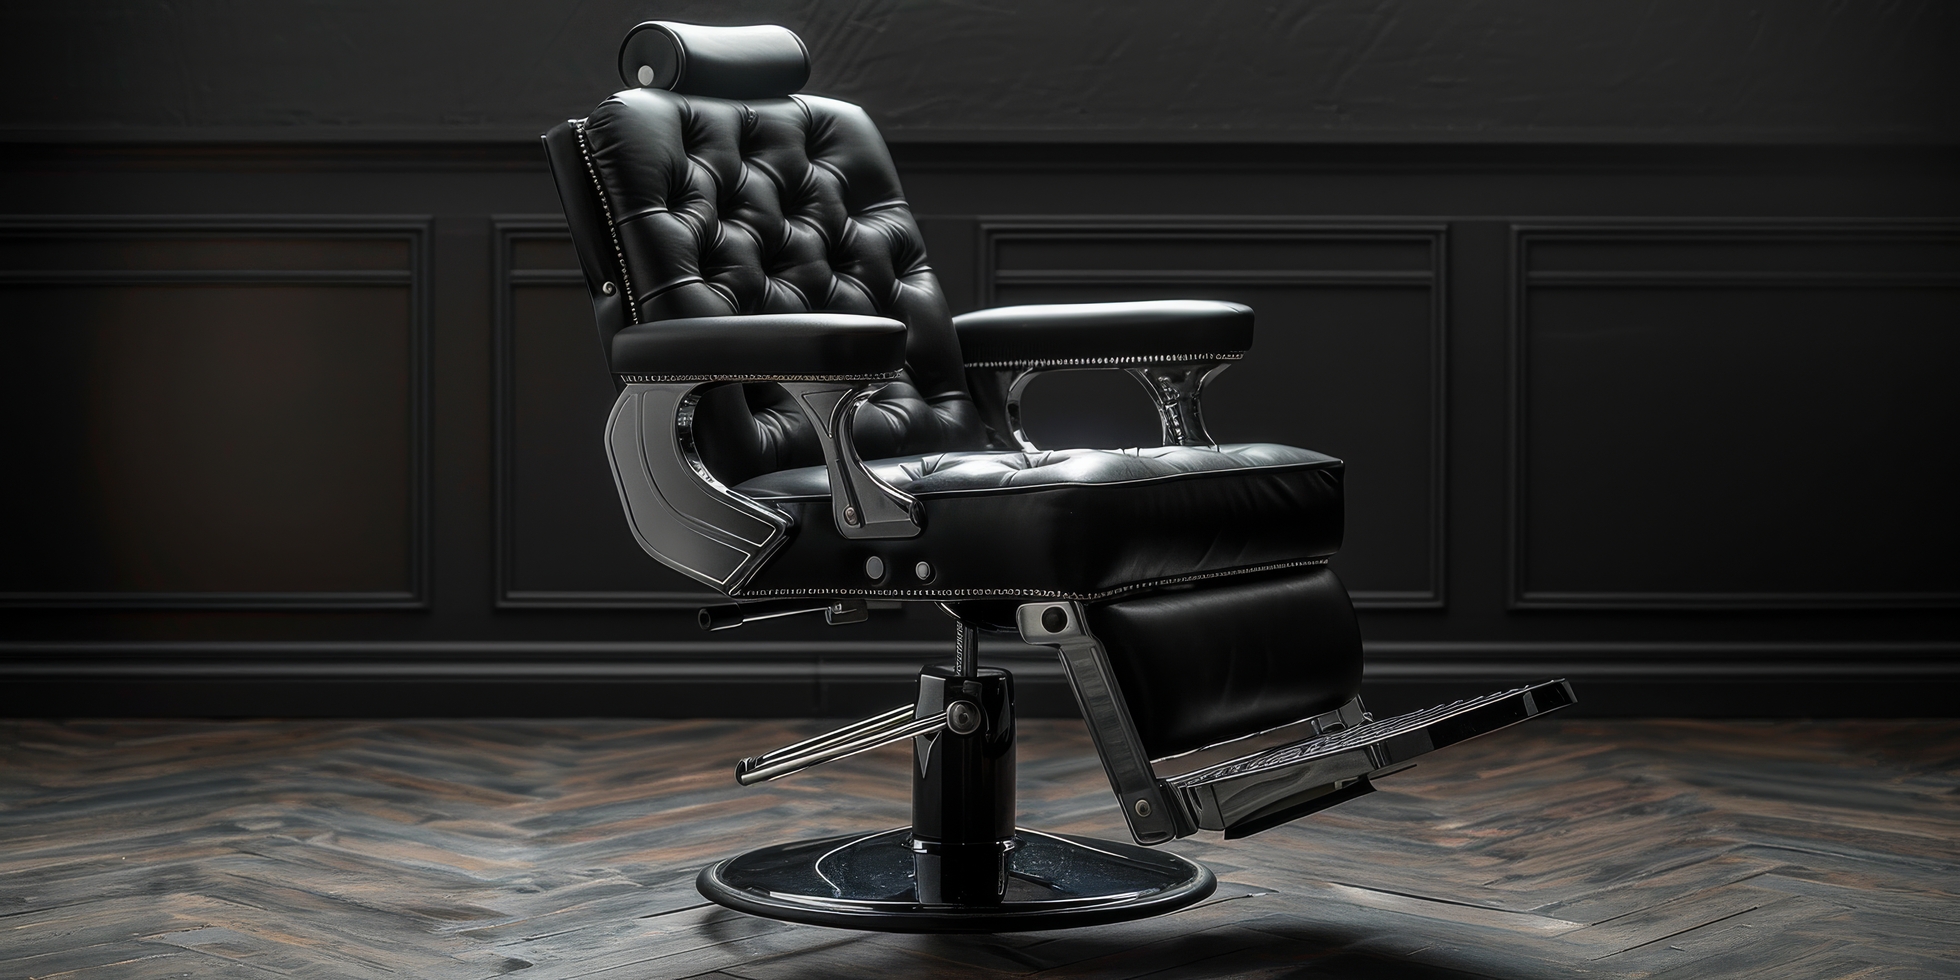 ¿Cuáles son las principales características de un buen sillón de barbero?